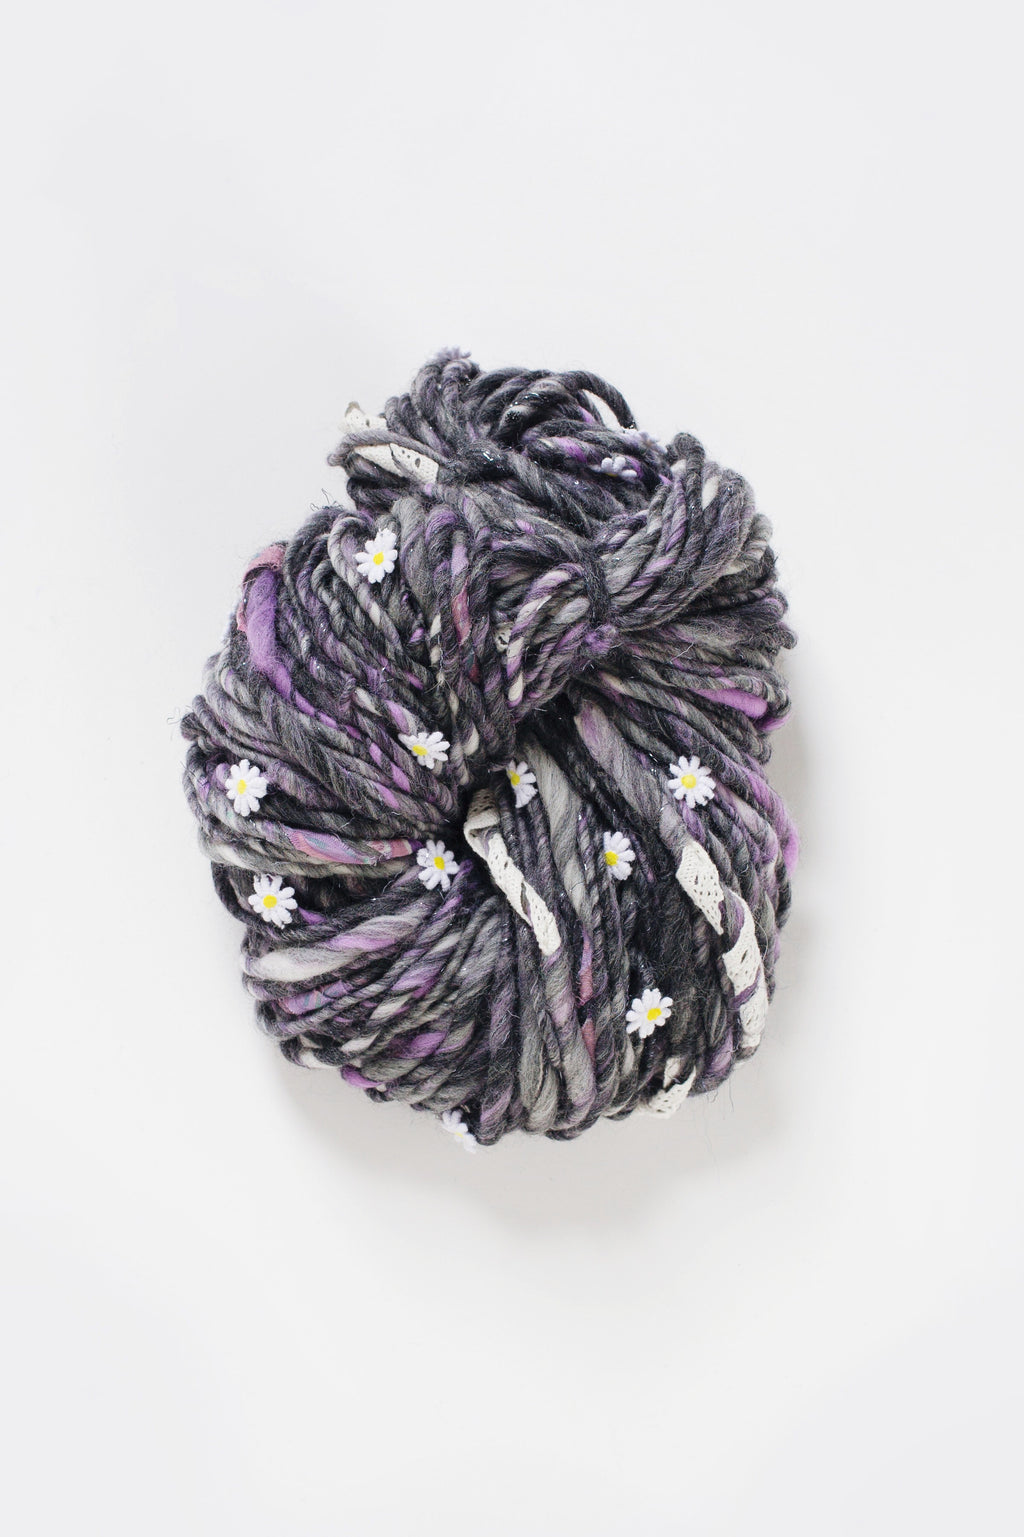 Daisy Chain Yarn in Hyacinth Purple by Knit Collage - Chunky bulky Hand knitting yarn